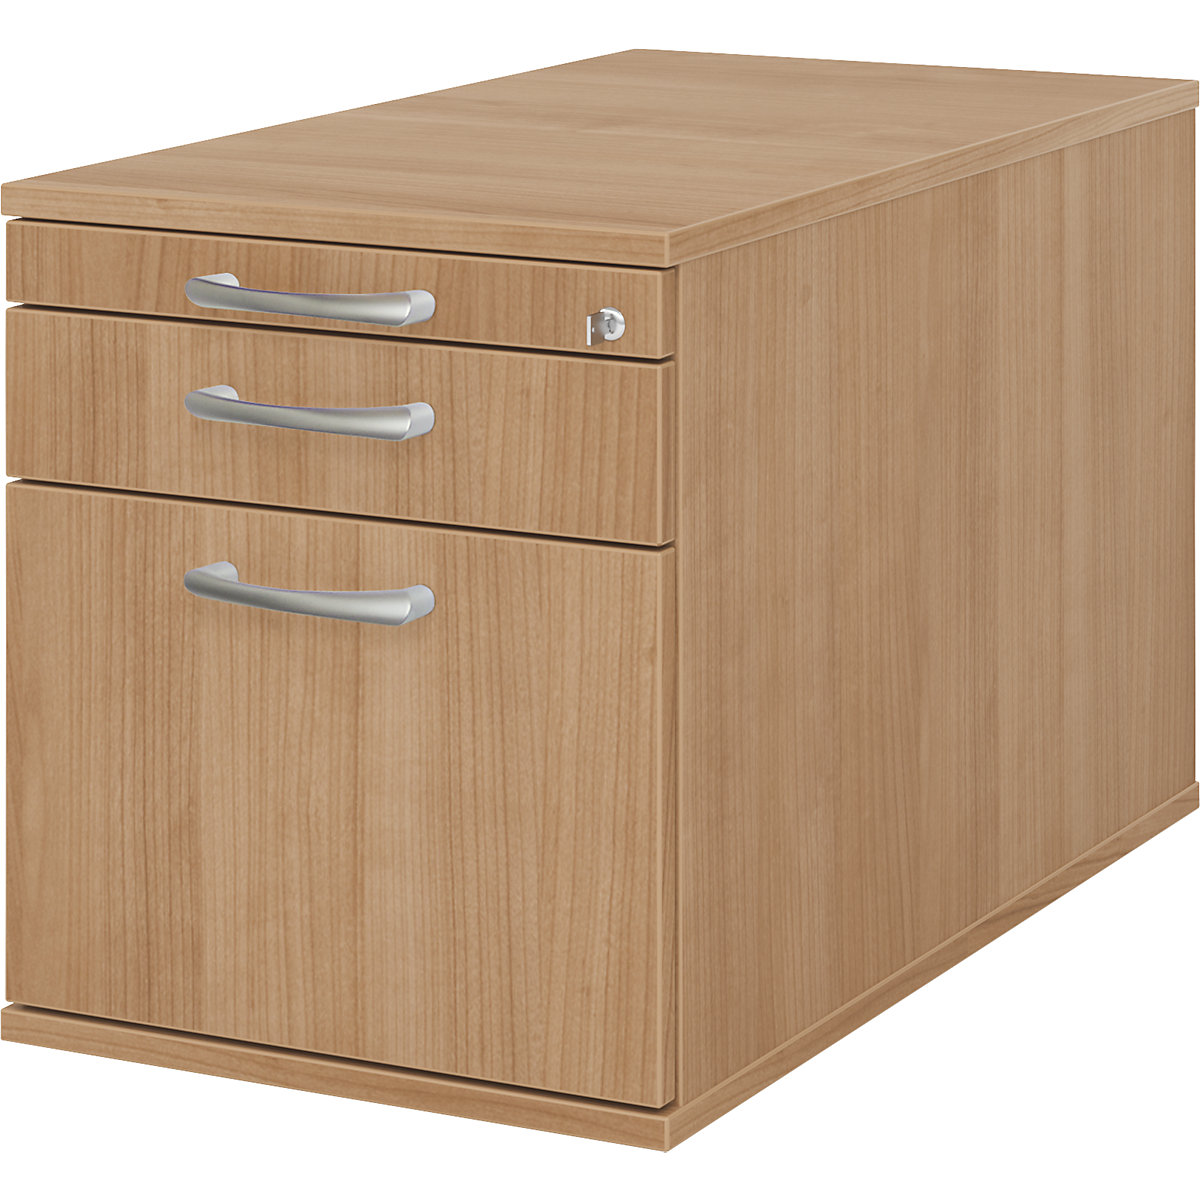 Mobile pedestal ANNY – eurokraft pro, 1 utensil drawer, 1 drawer, 1 file suspension drawer, depth 800 mm, walnut finish-7